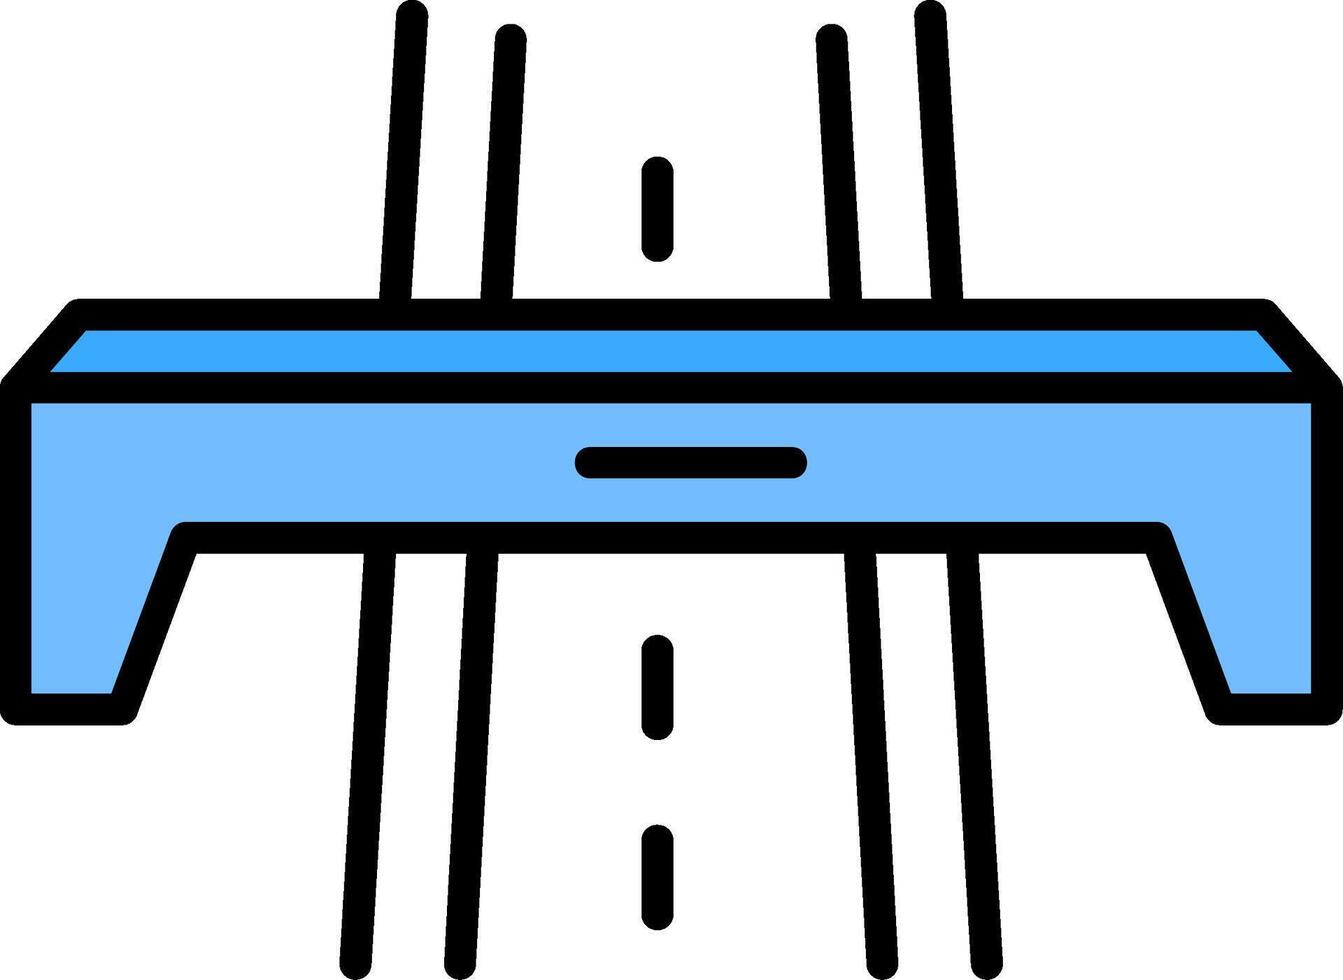 Autobahn Linie gefüllt Symbol vektor